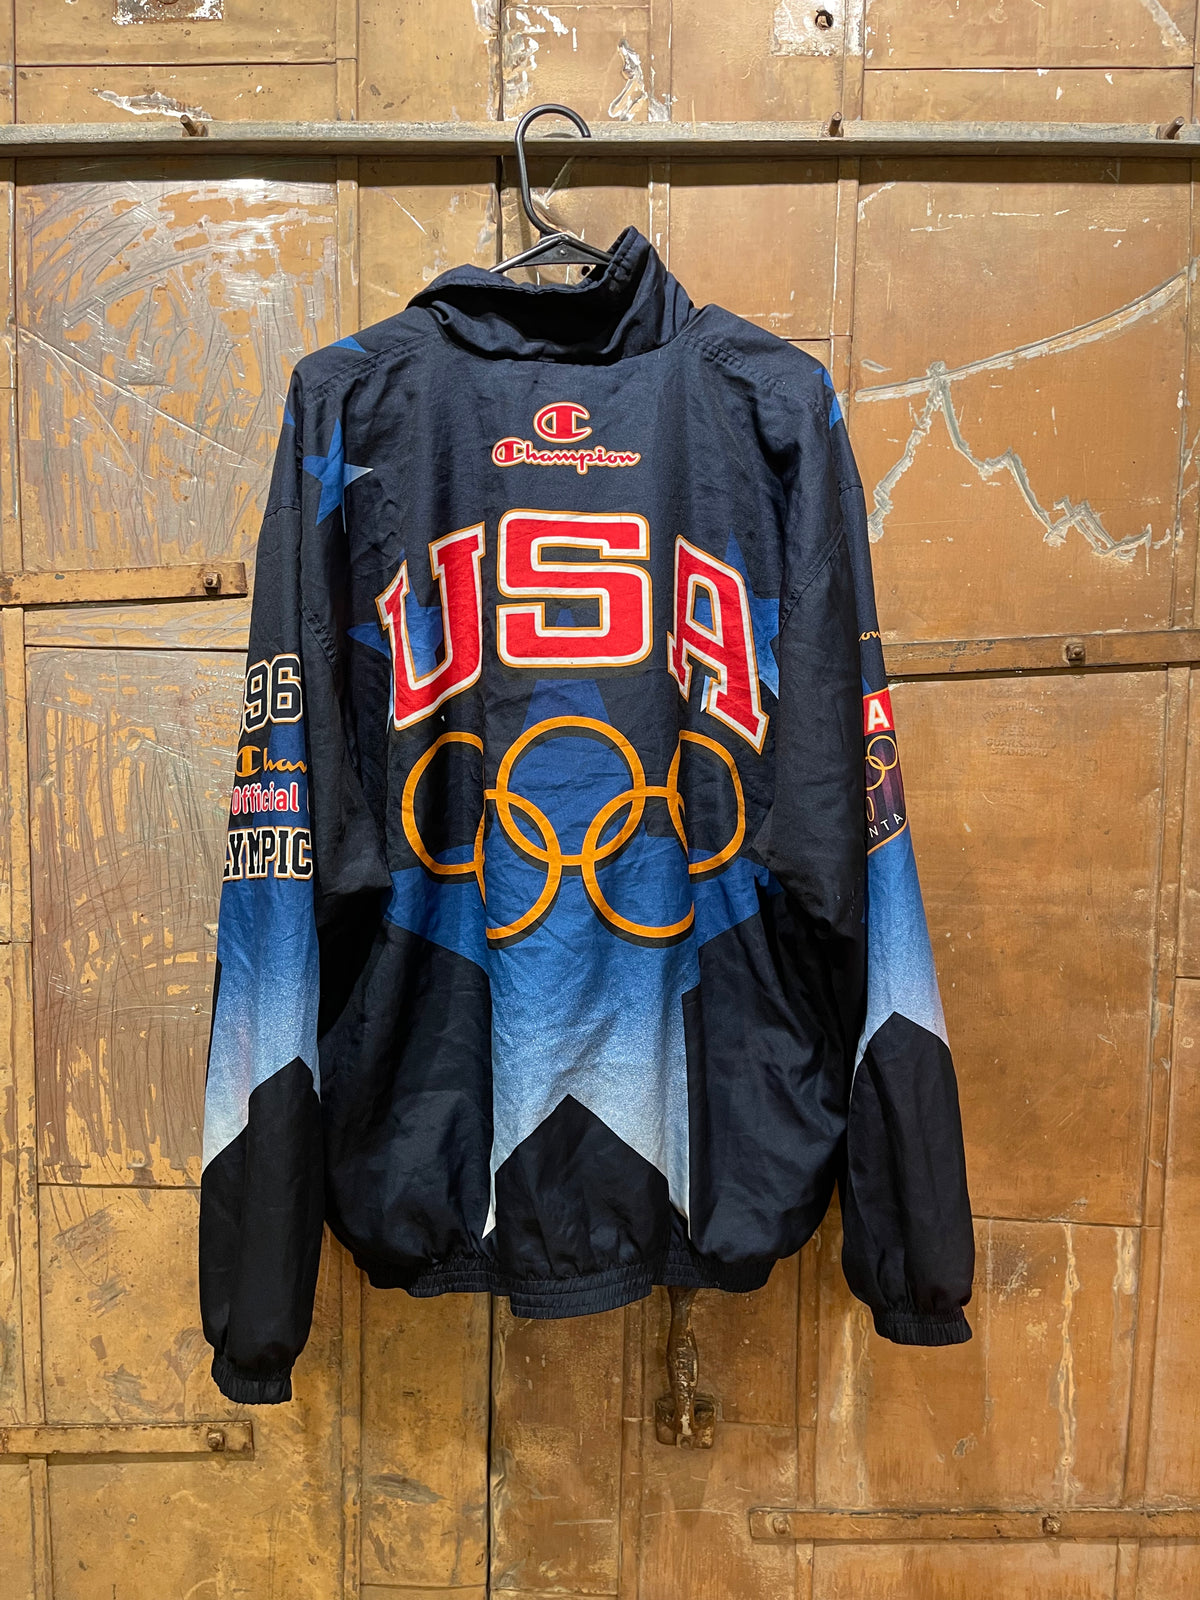 Olympic USA Championship jacket